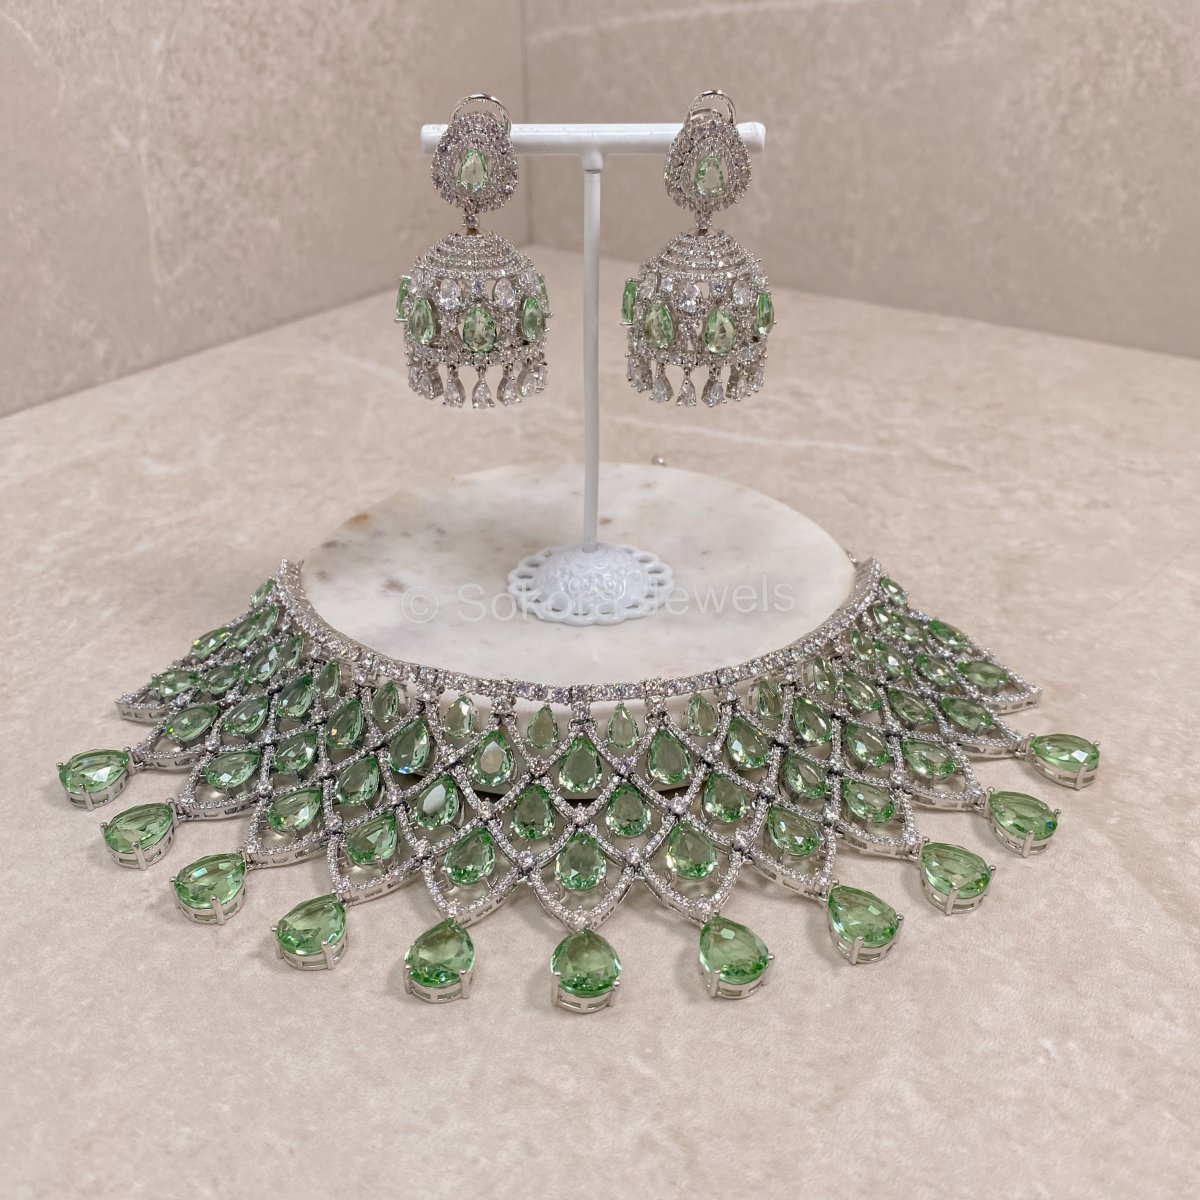 Divya Diamante Set - Mint - SOKORA JEWELSDivya Diamante Set - MintNECKLACE SETS